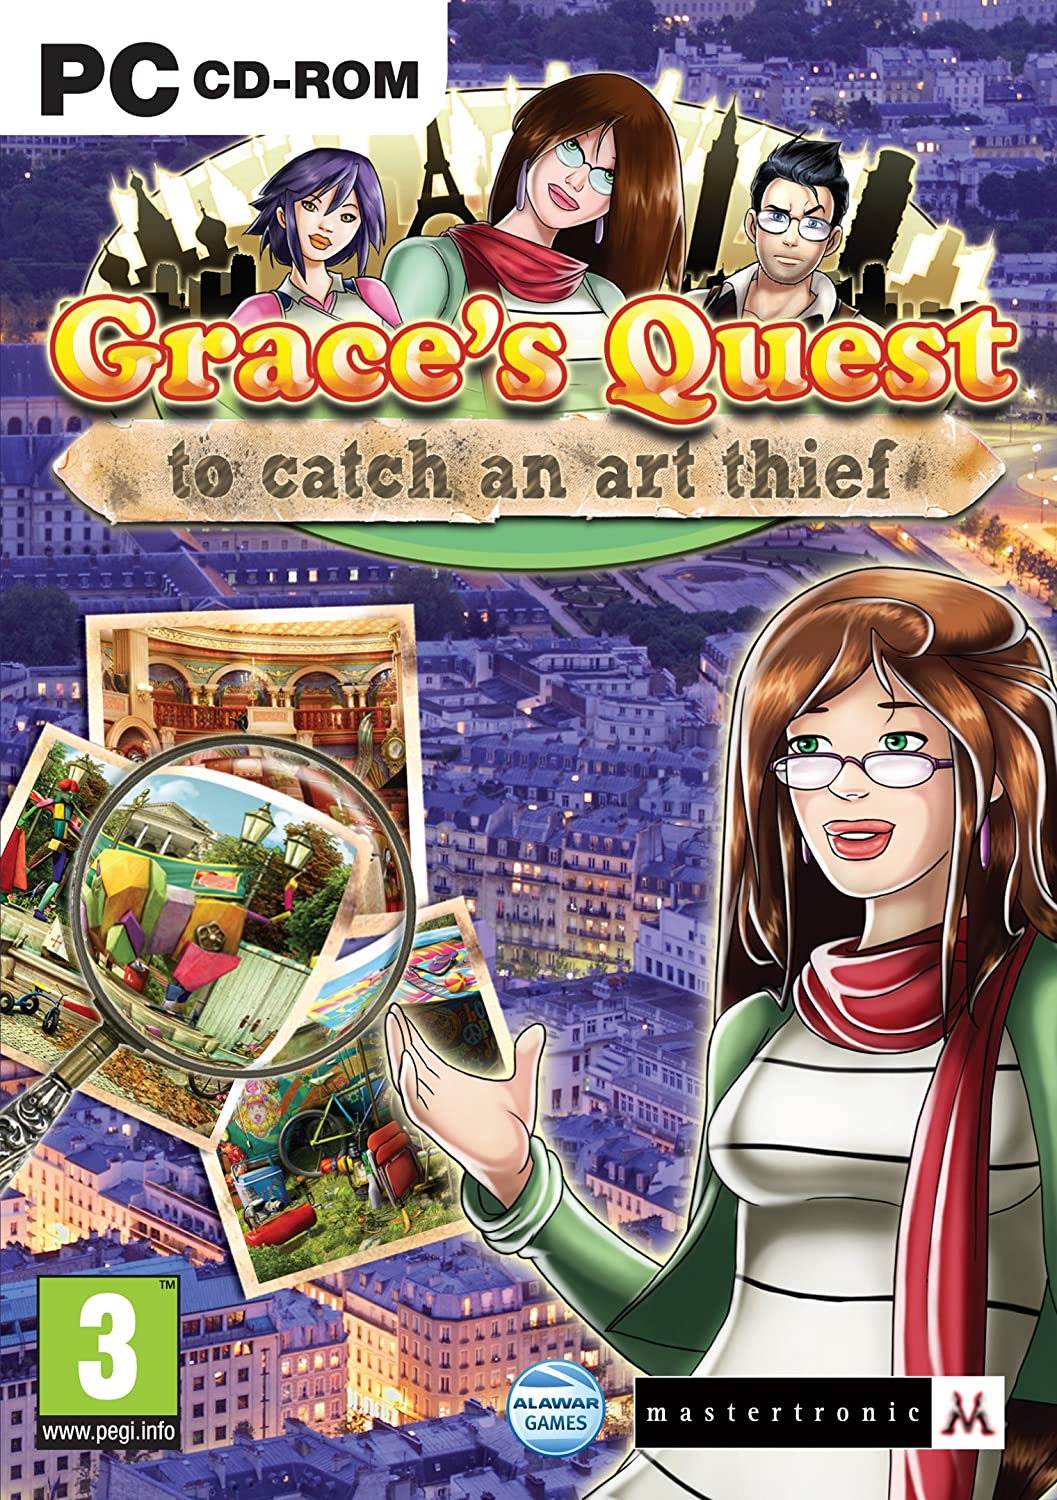 Grace's Quest: To Catch An Art Thief (PC-DVD)